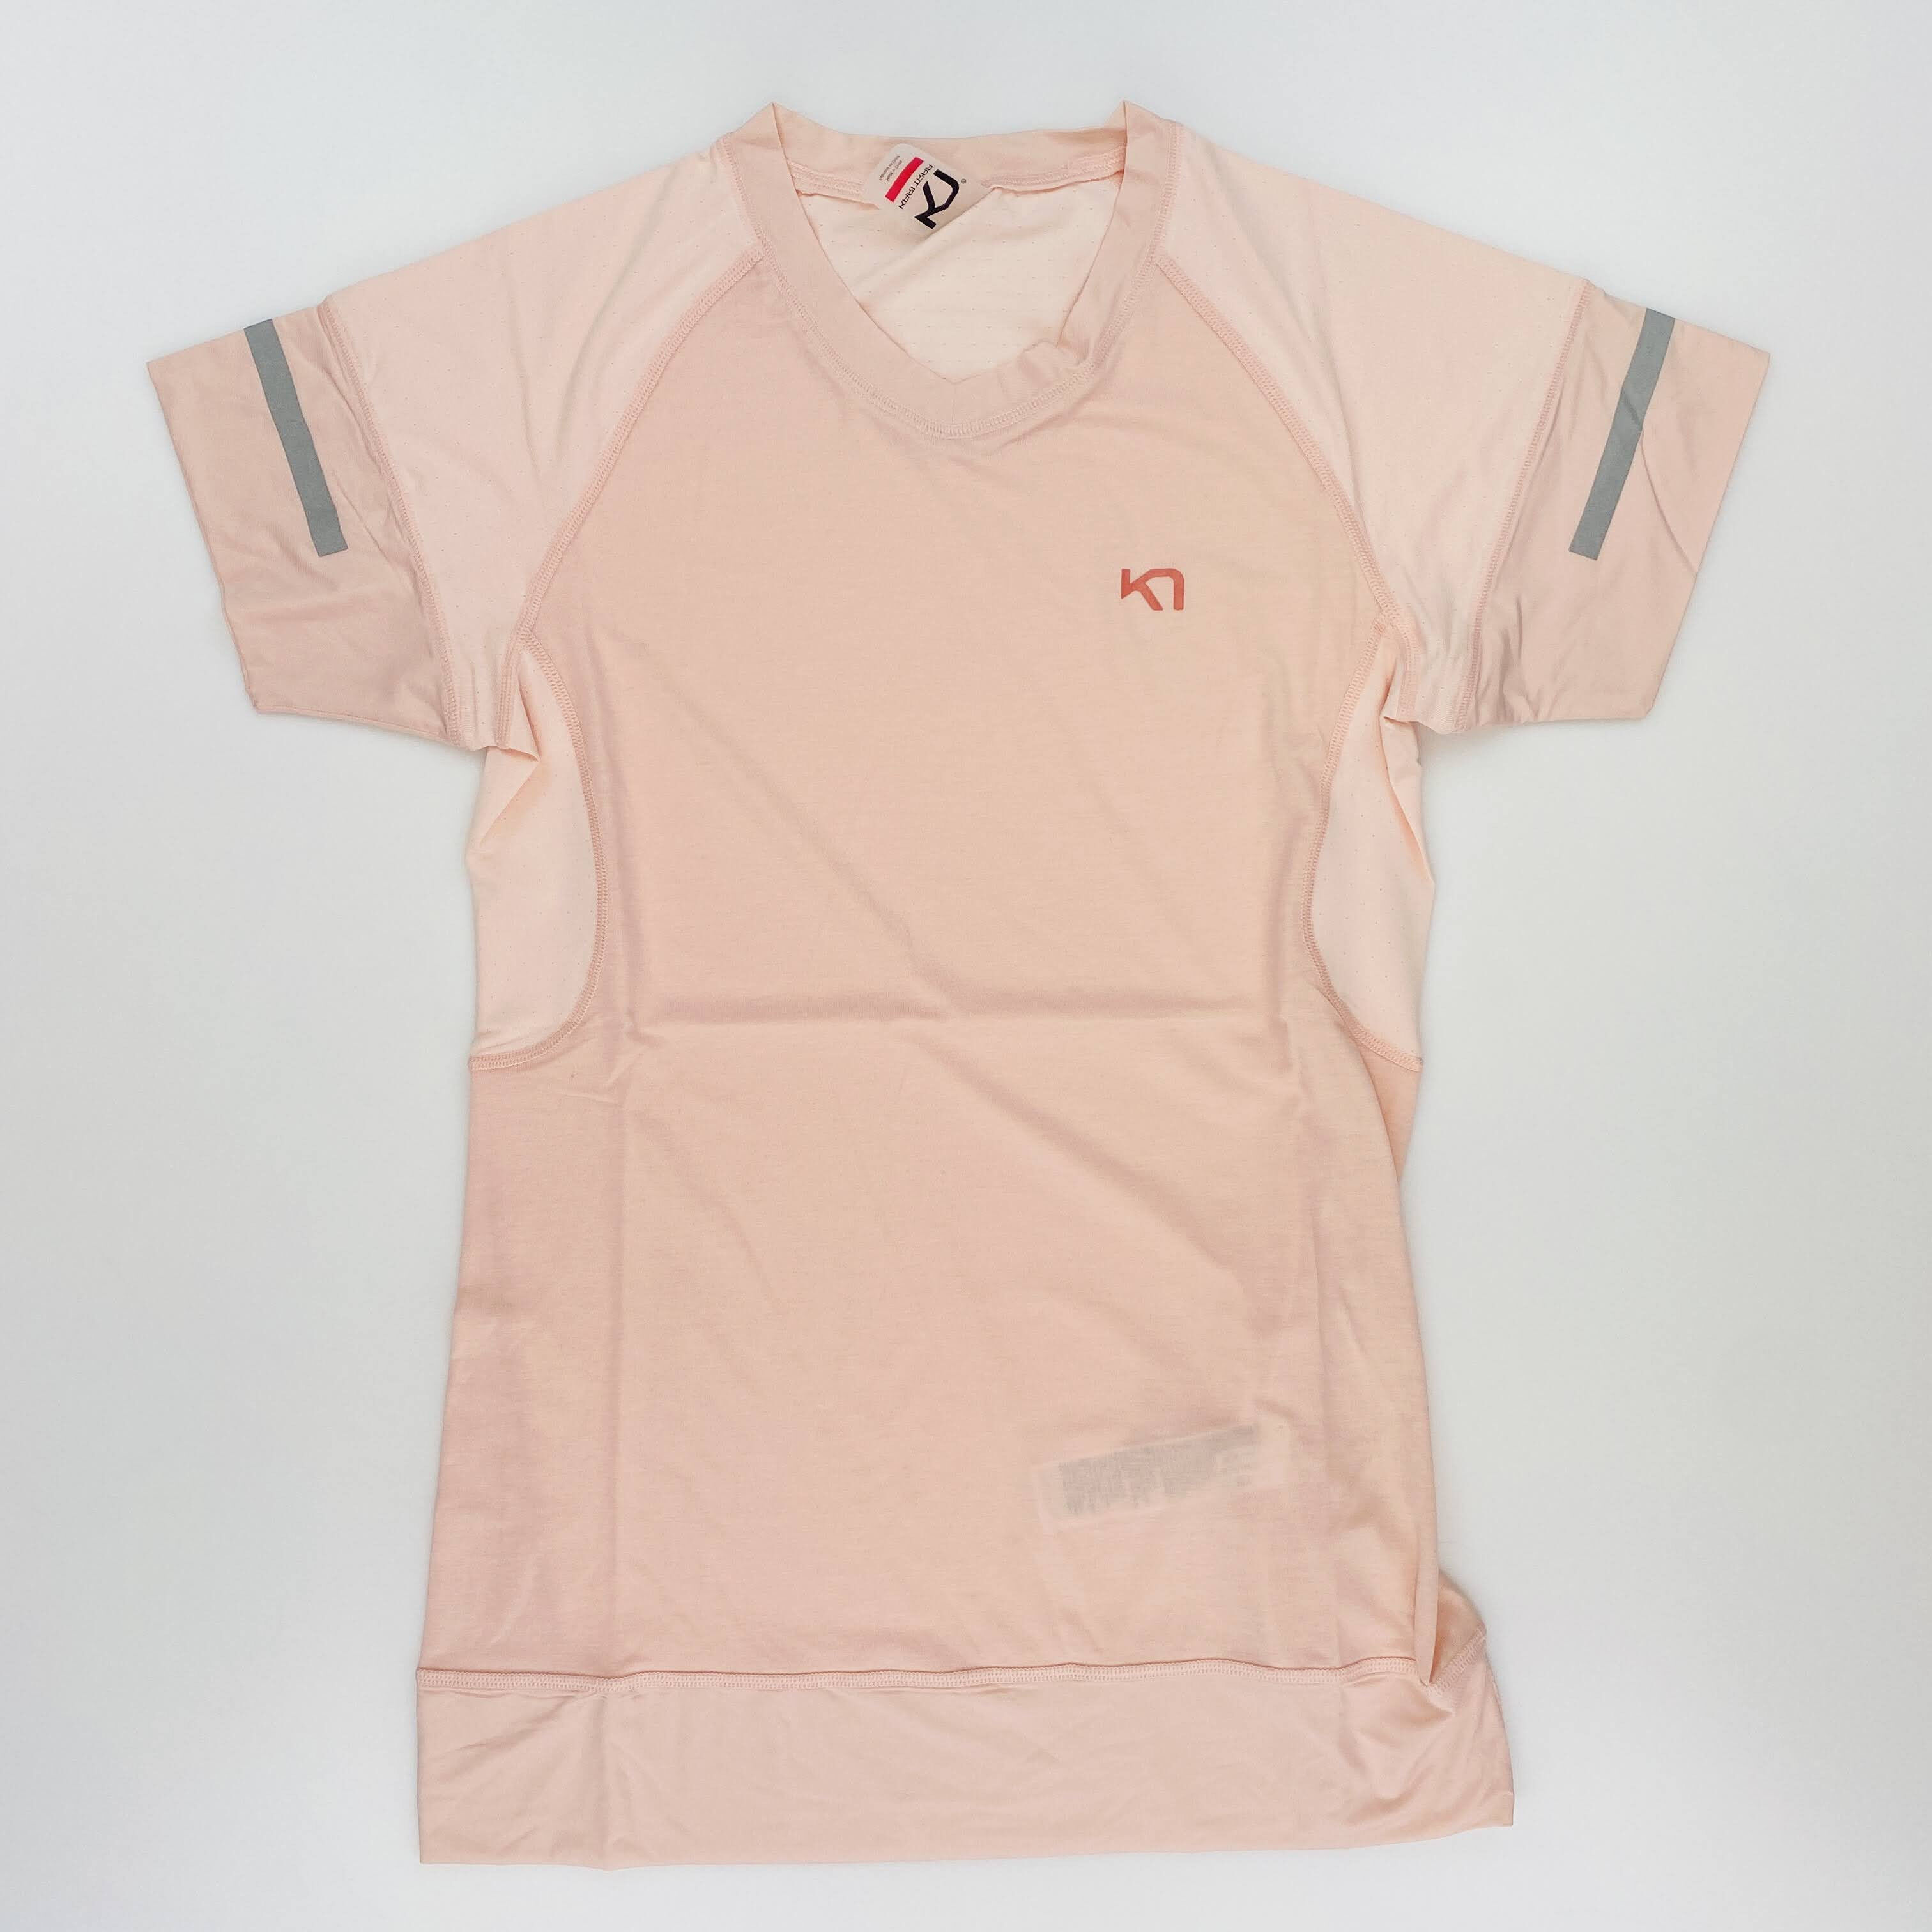 Kari Traa Sigrun Tee - Segunda Mano Camiseta - Mujer - Rosado - M | Hardloop